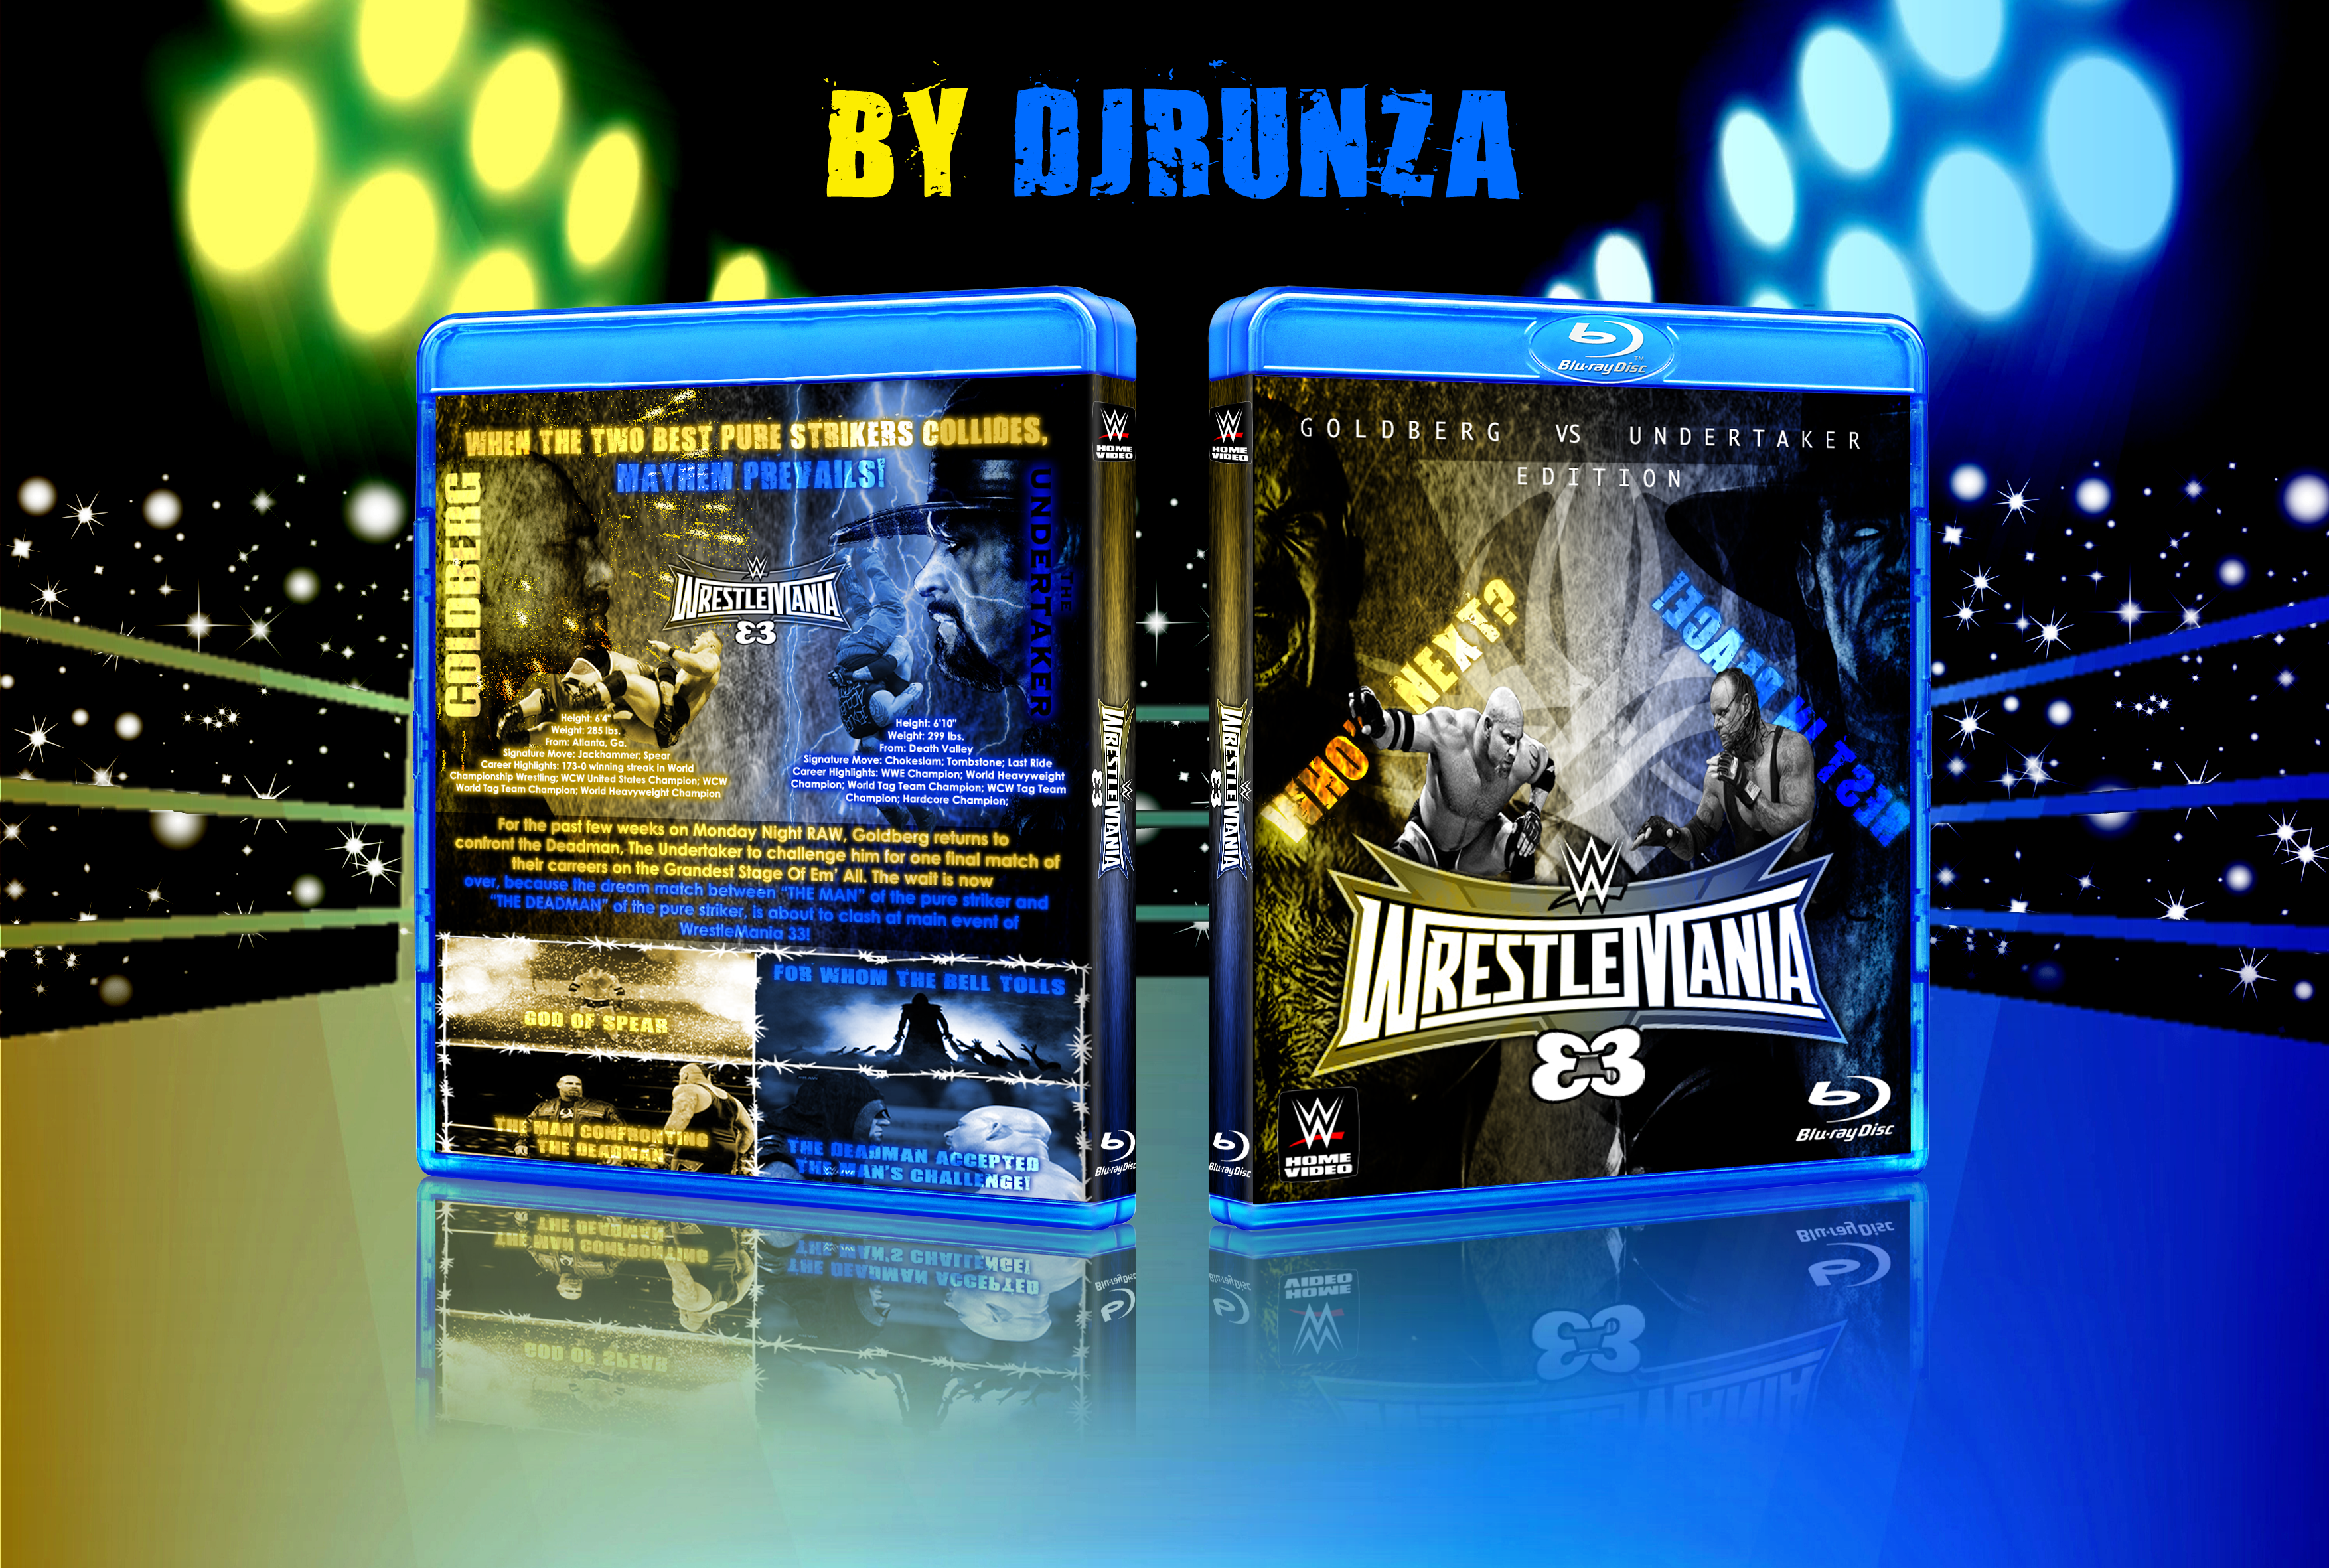 WWE Wrestlamania 33: G VS U Edition box cover